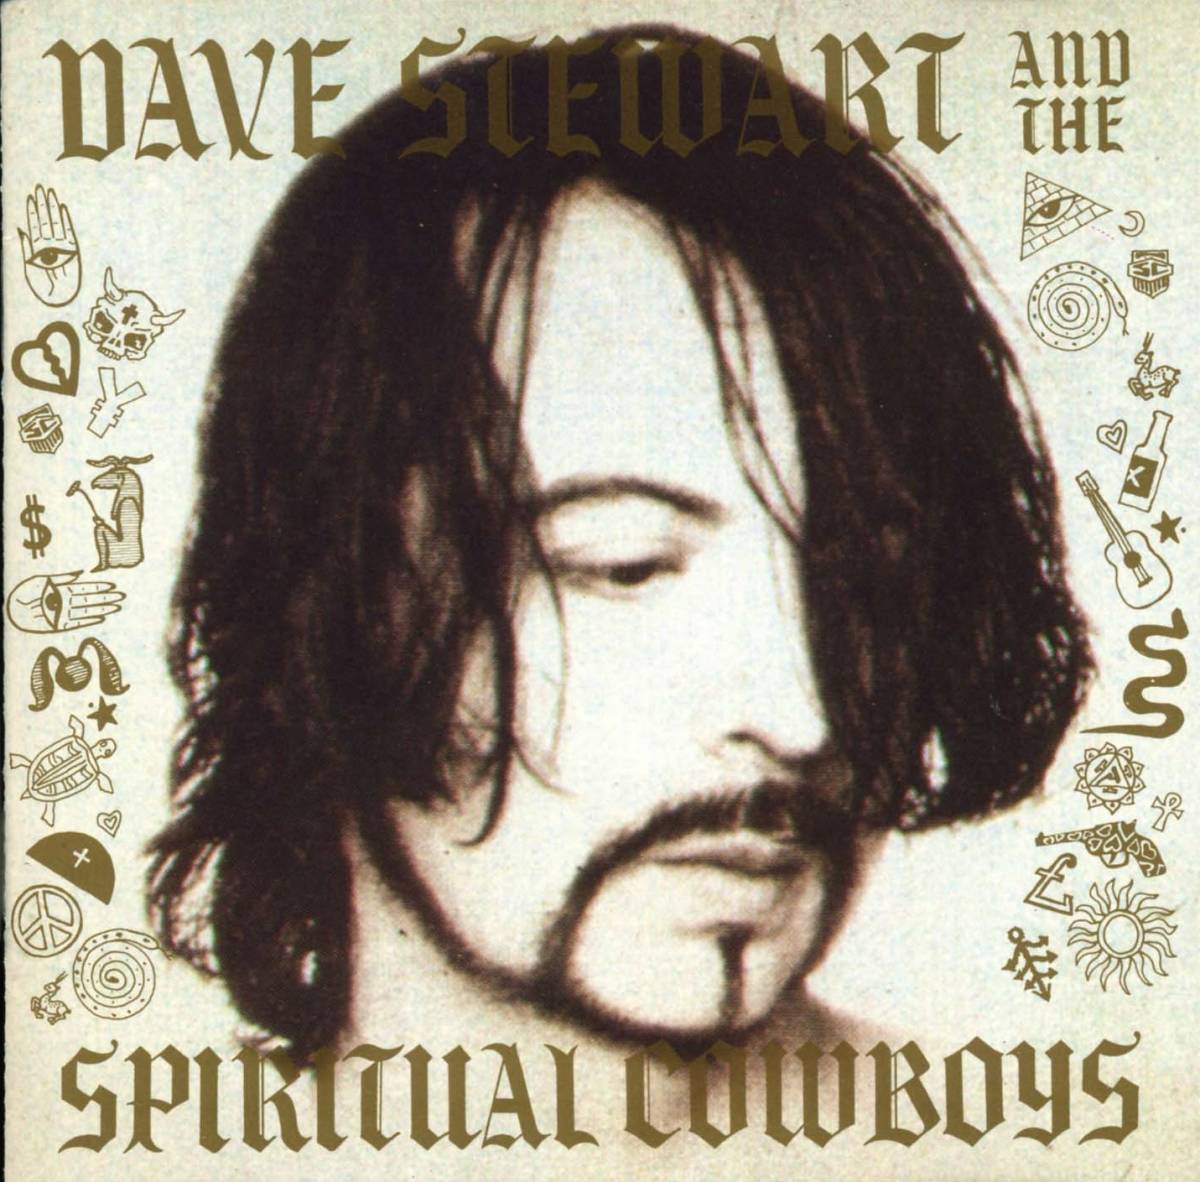 Dave STEWART&the SPIRITUAL COWBOYS★Dave Stewart and the Spiritual Cowboys [デイヴ スチュワート,ユーリズミックス]_画像1